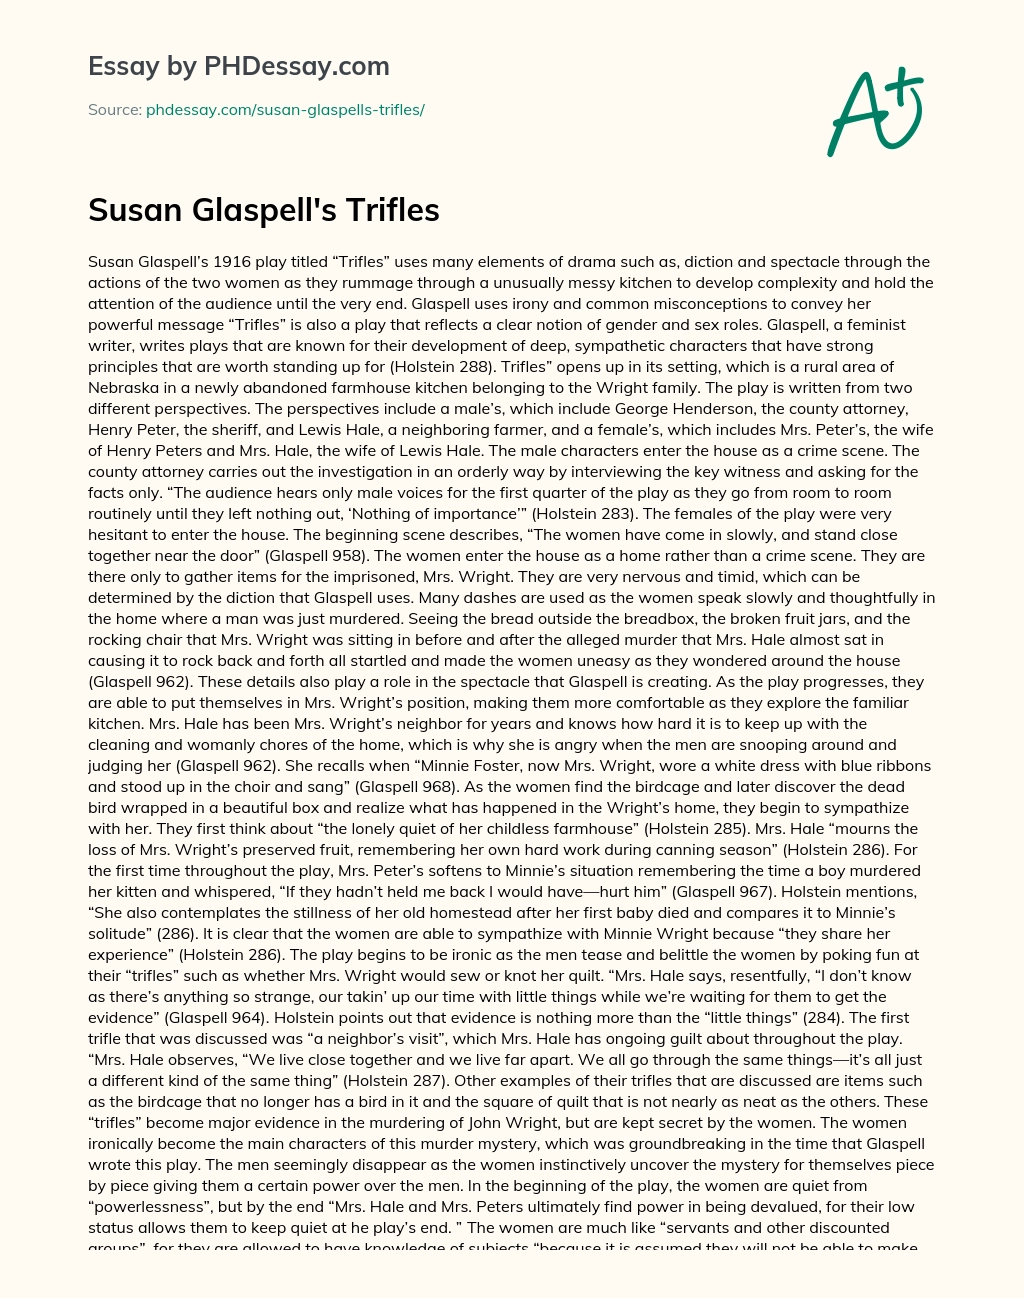 Susan Glaspell’s Trifles essay